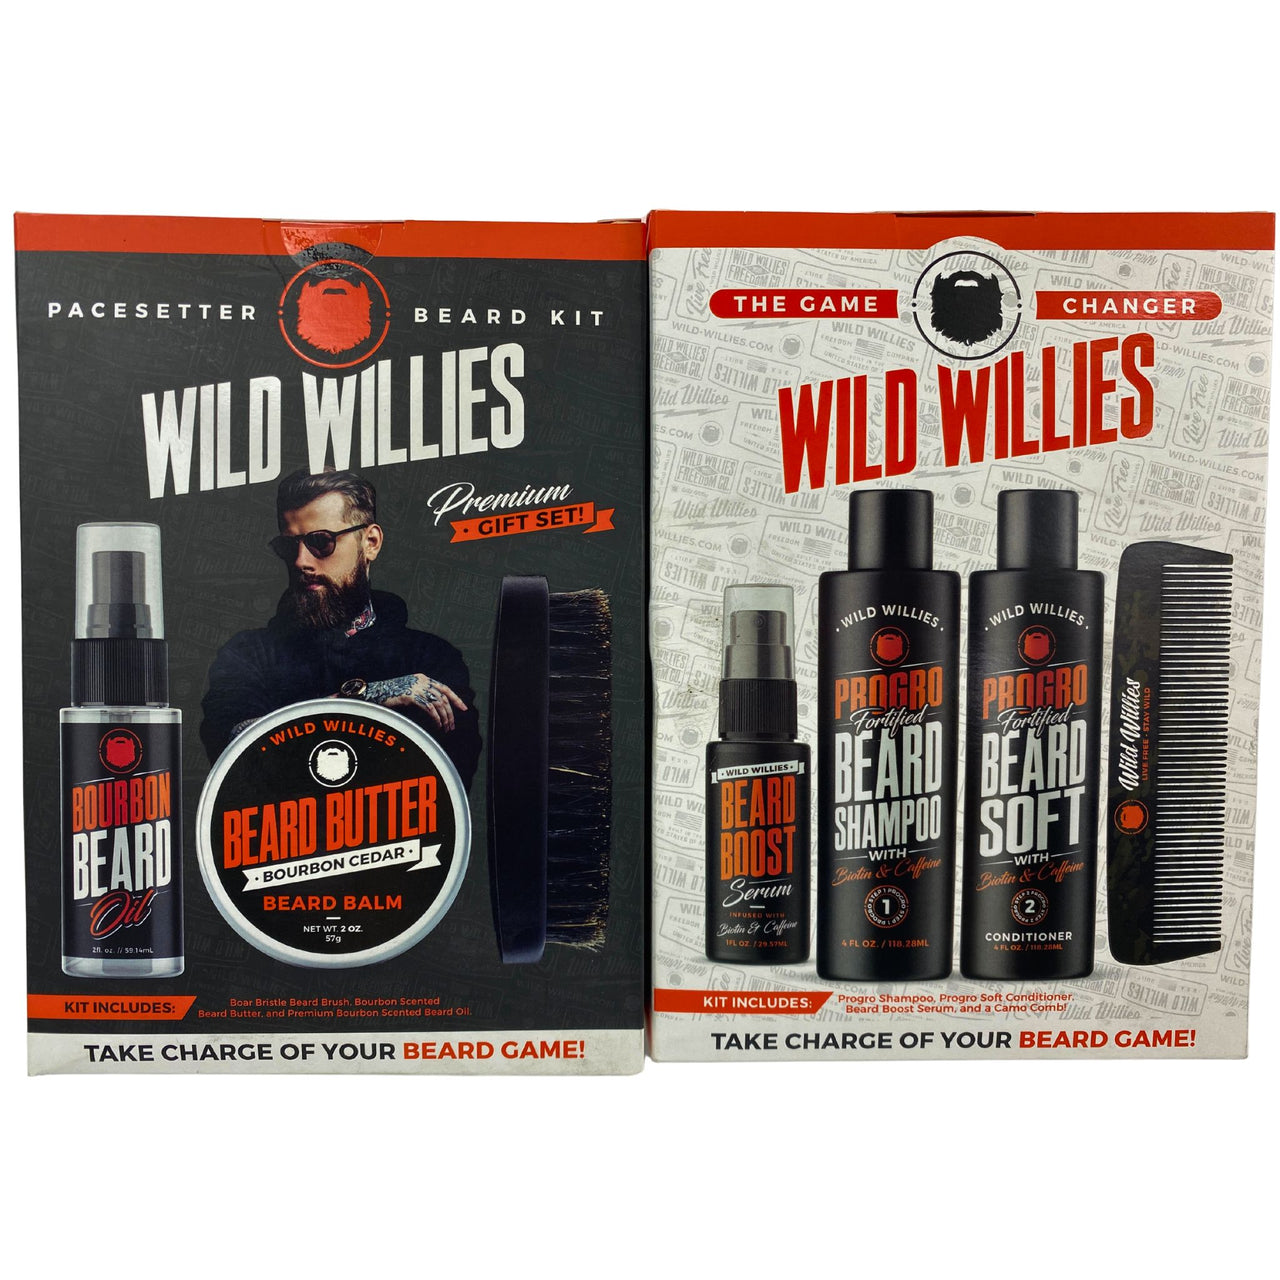 Wild Willies Take Charge of Your Beard Game! Beard Care Kits